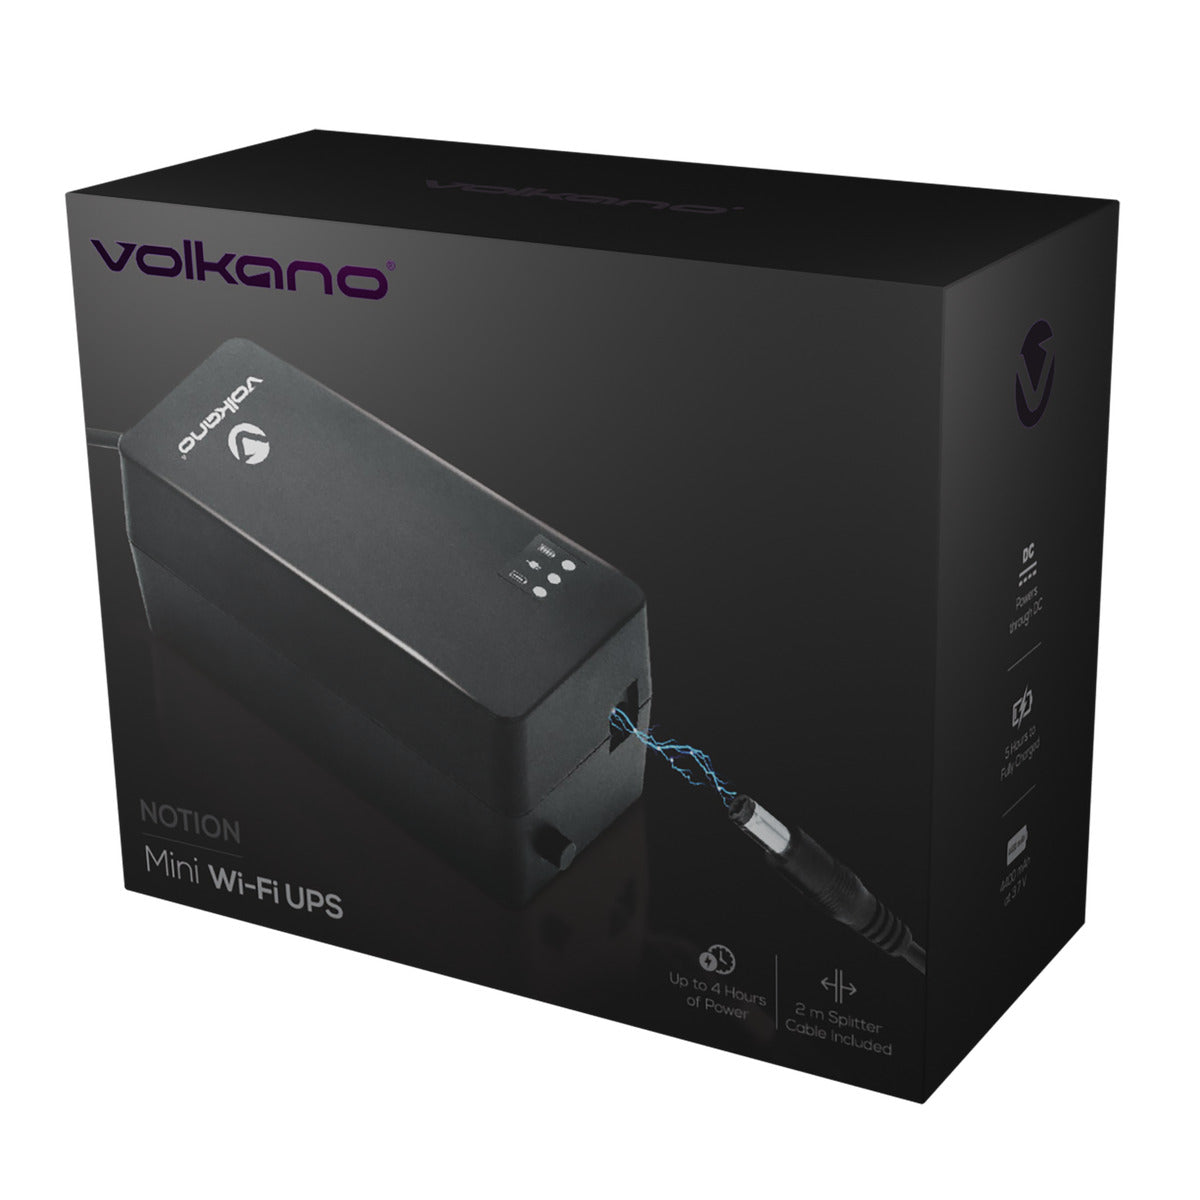 Volkano Notion series Mini UPS Wifi / Router backup